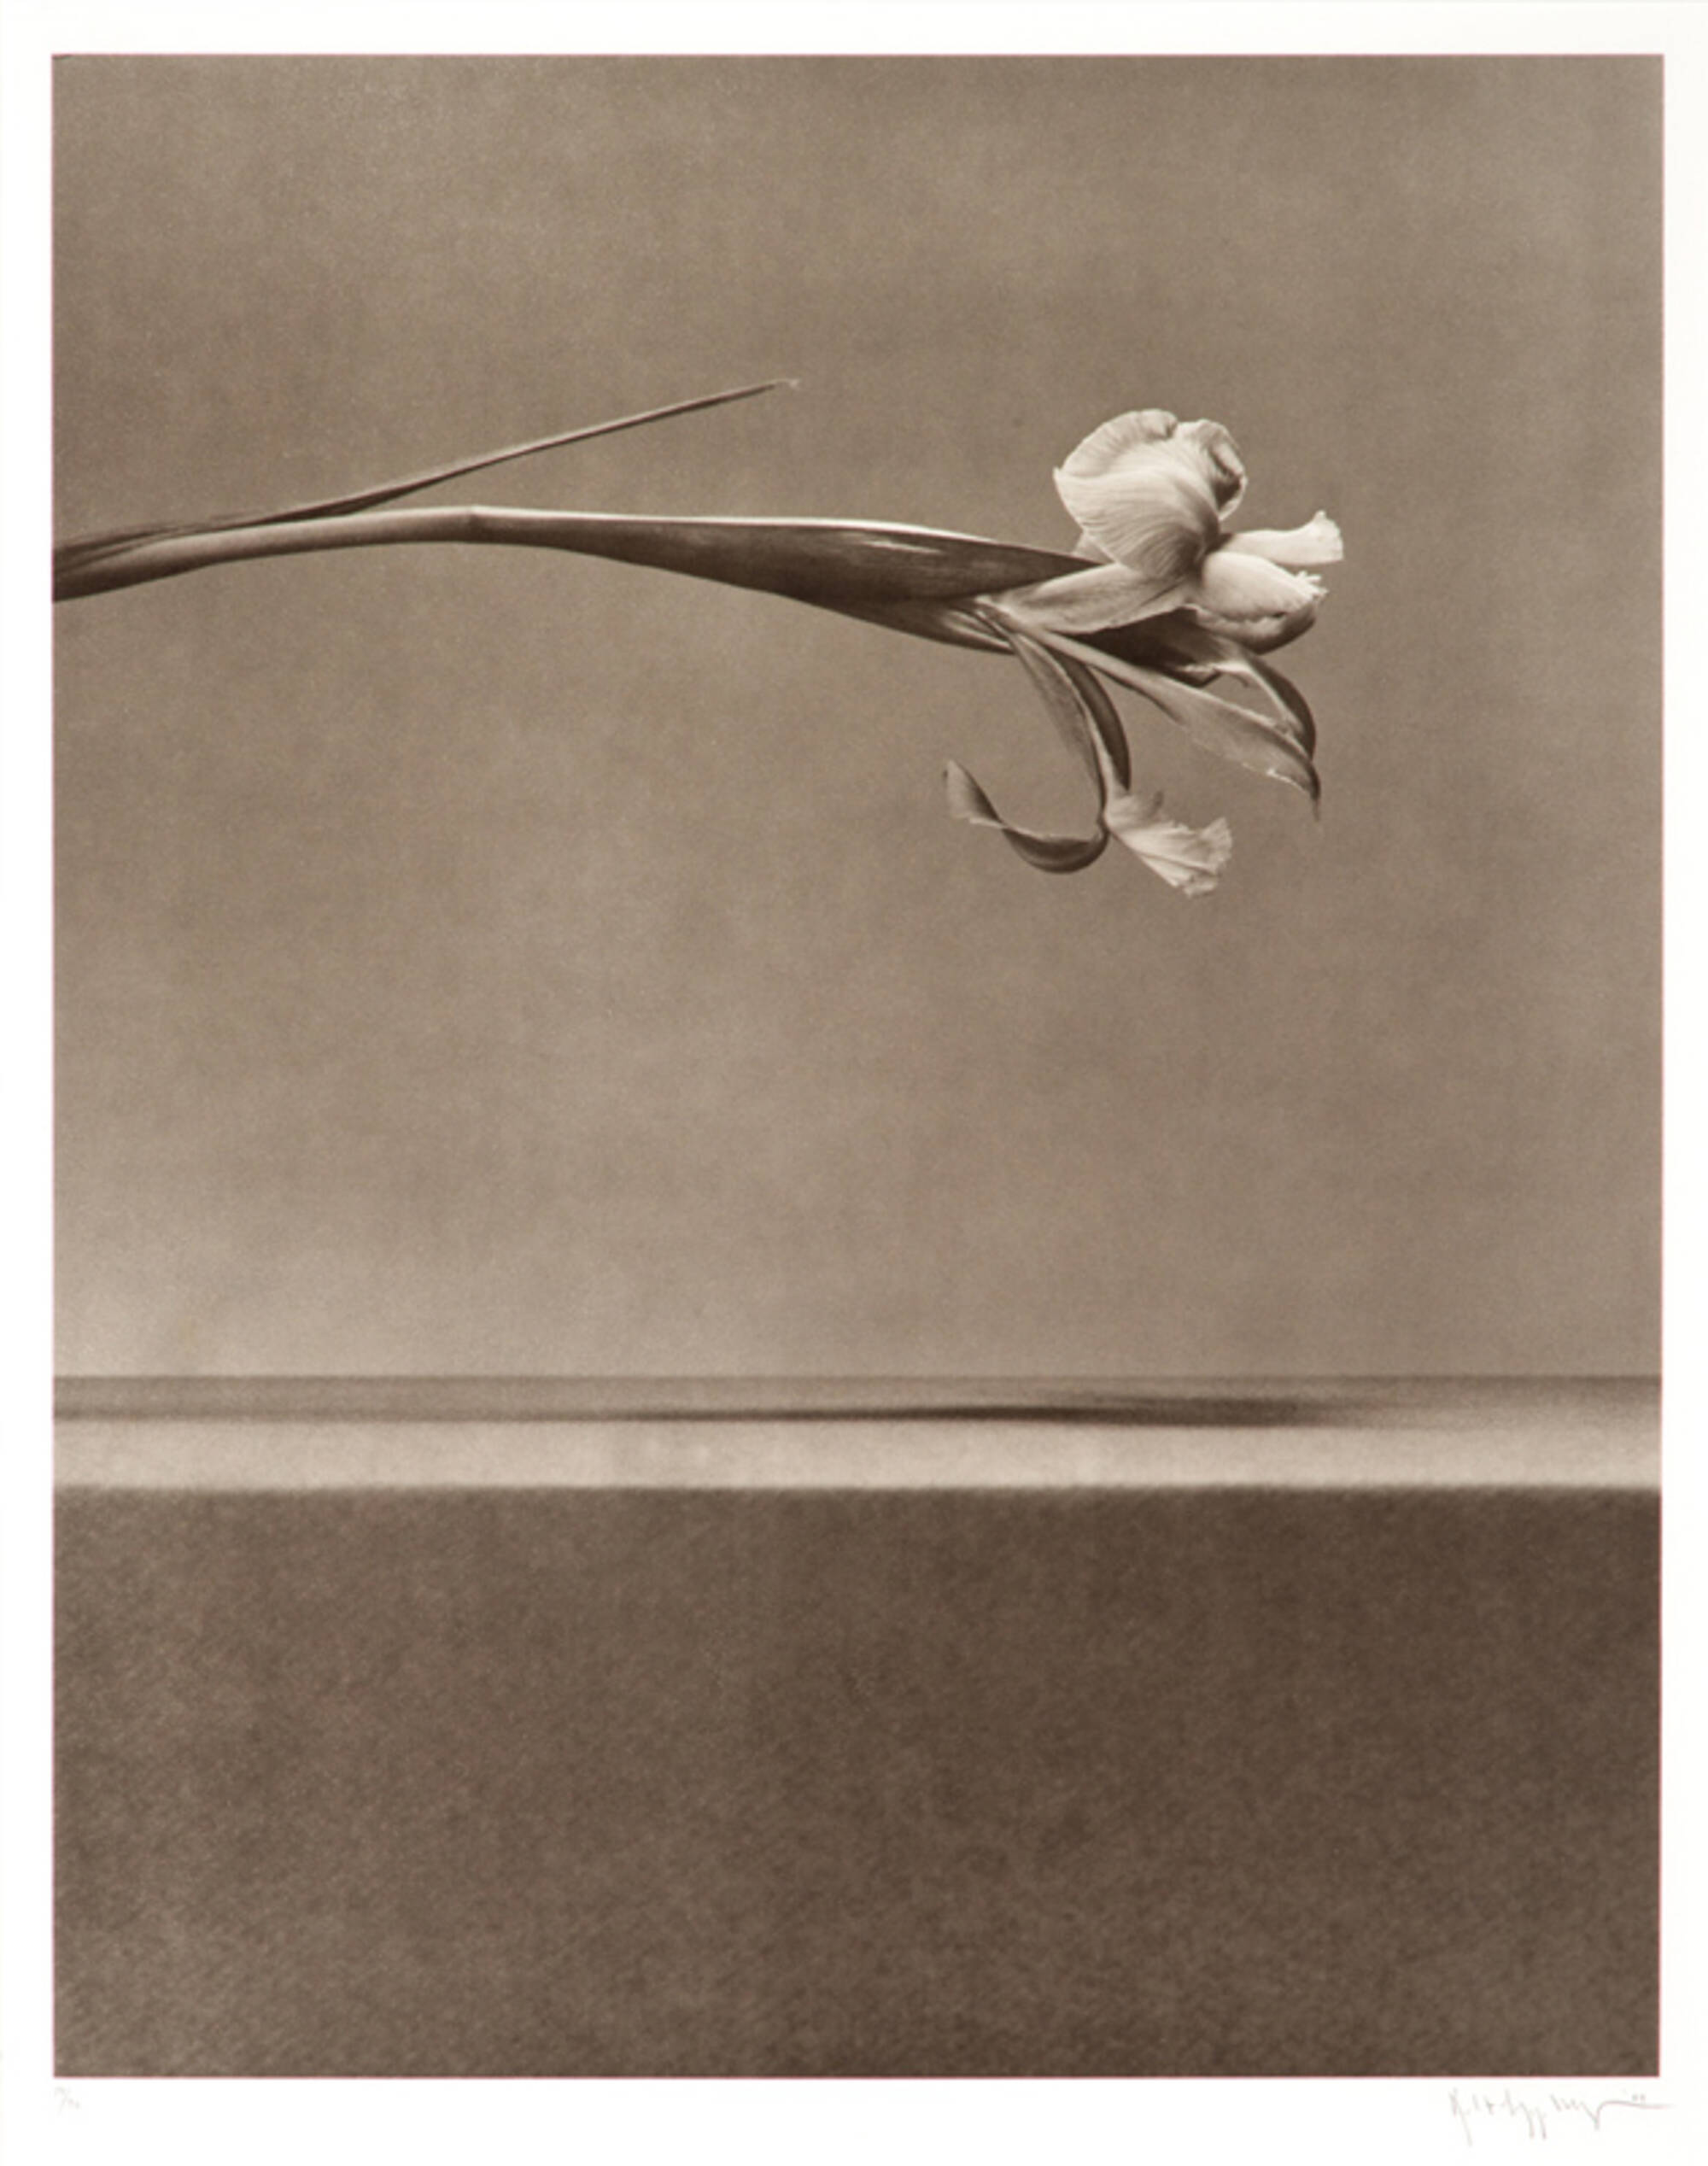 175: ROBERT MAPPLETHORPE, Untitled (from Flowers Portfolio 